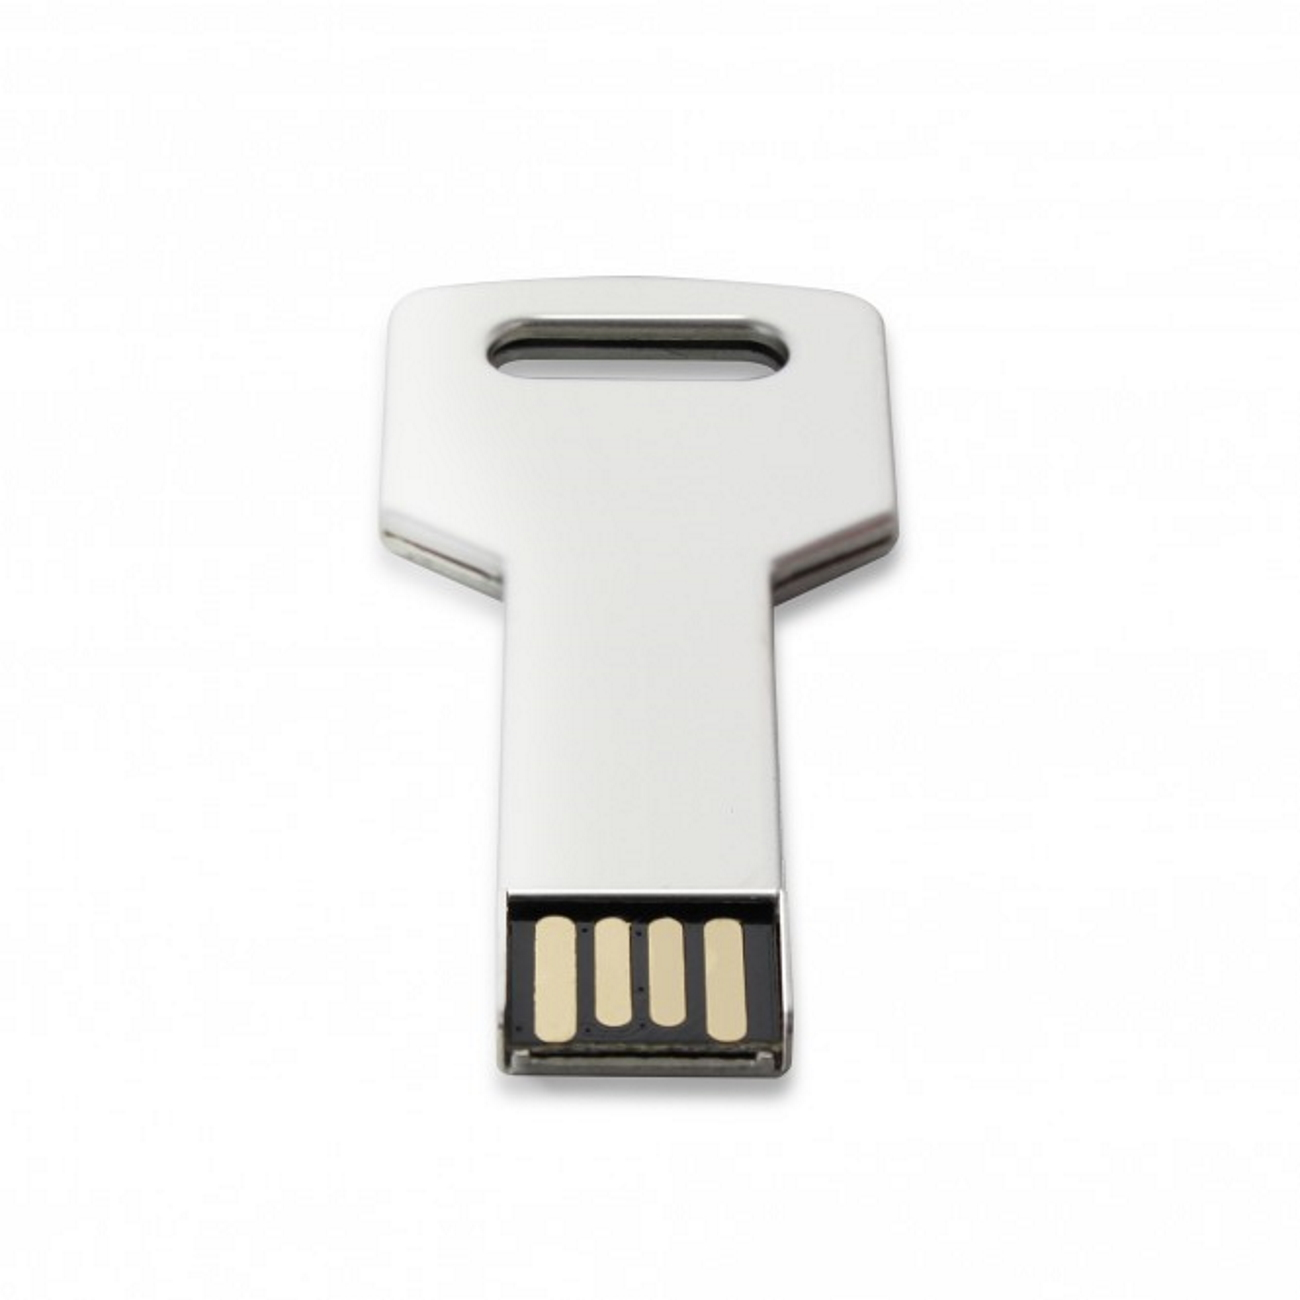 Key 2 ®Schlüssel (Silber, GERMANY GB) USB USB-Stick